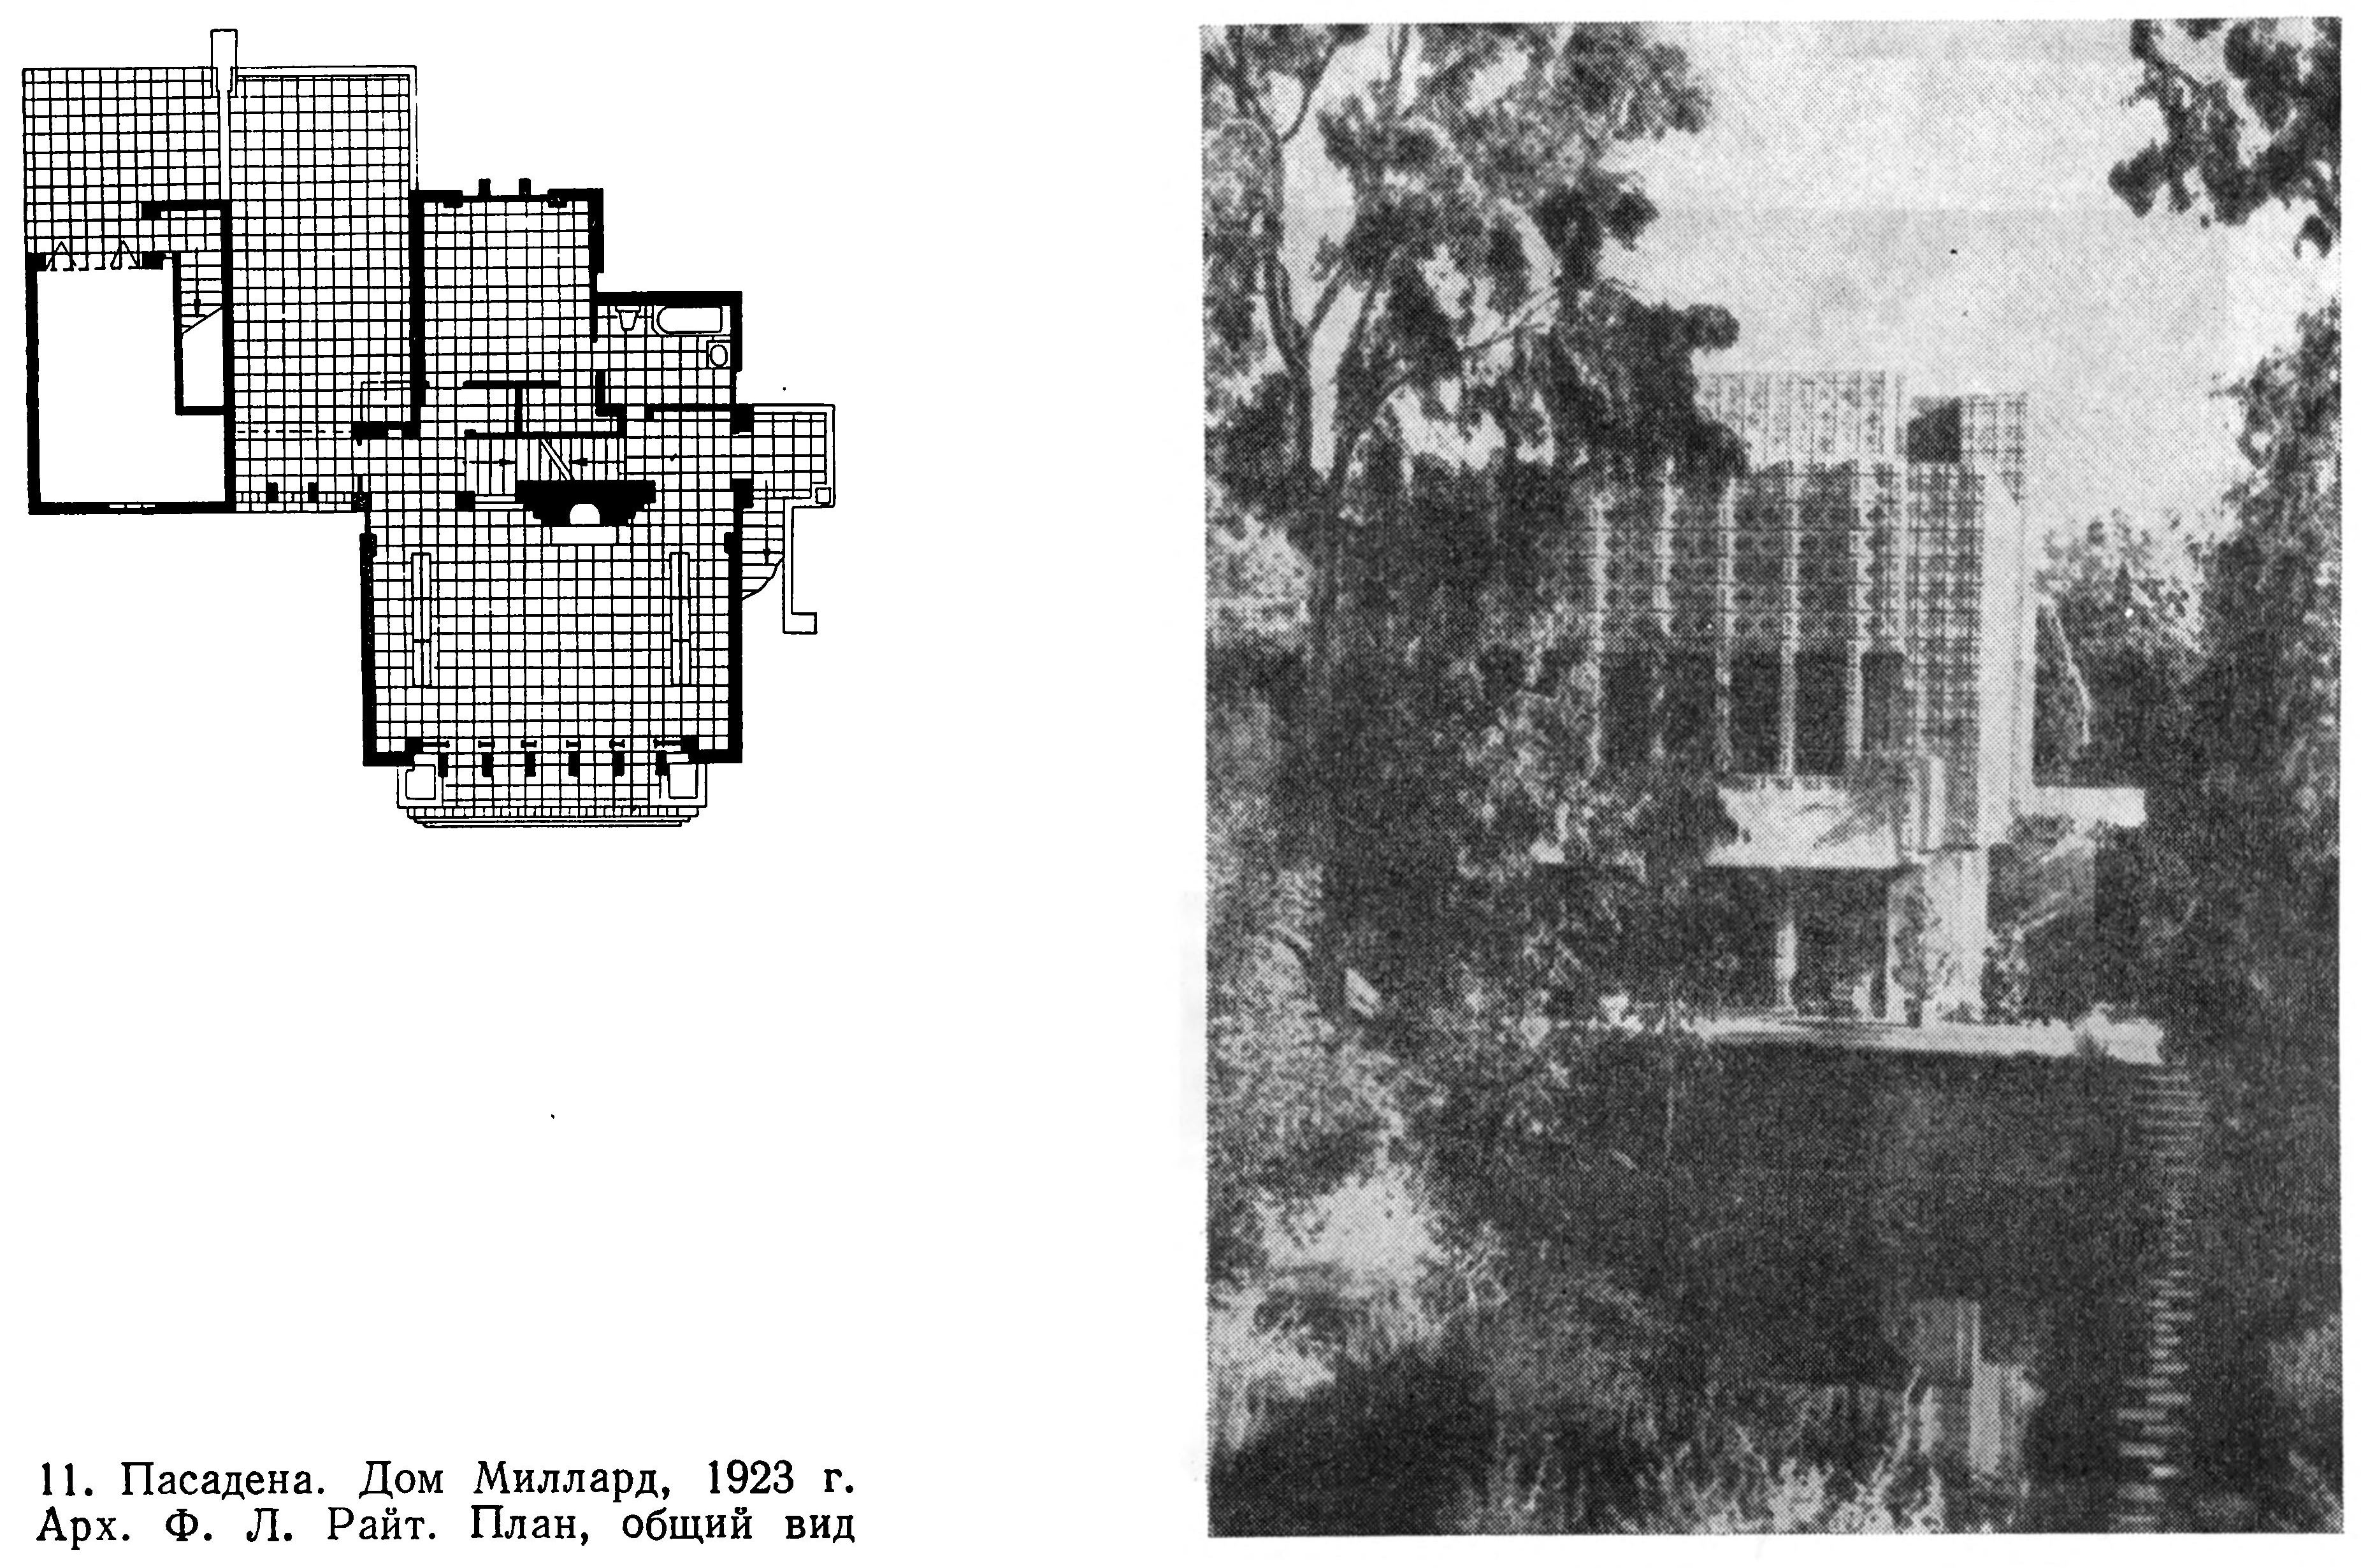 11. Пасадена. Дом Миллард, 1923 г. Арх. Ф. Л. Райт. План, общий вид